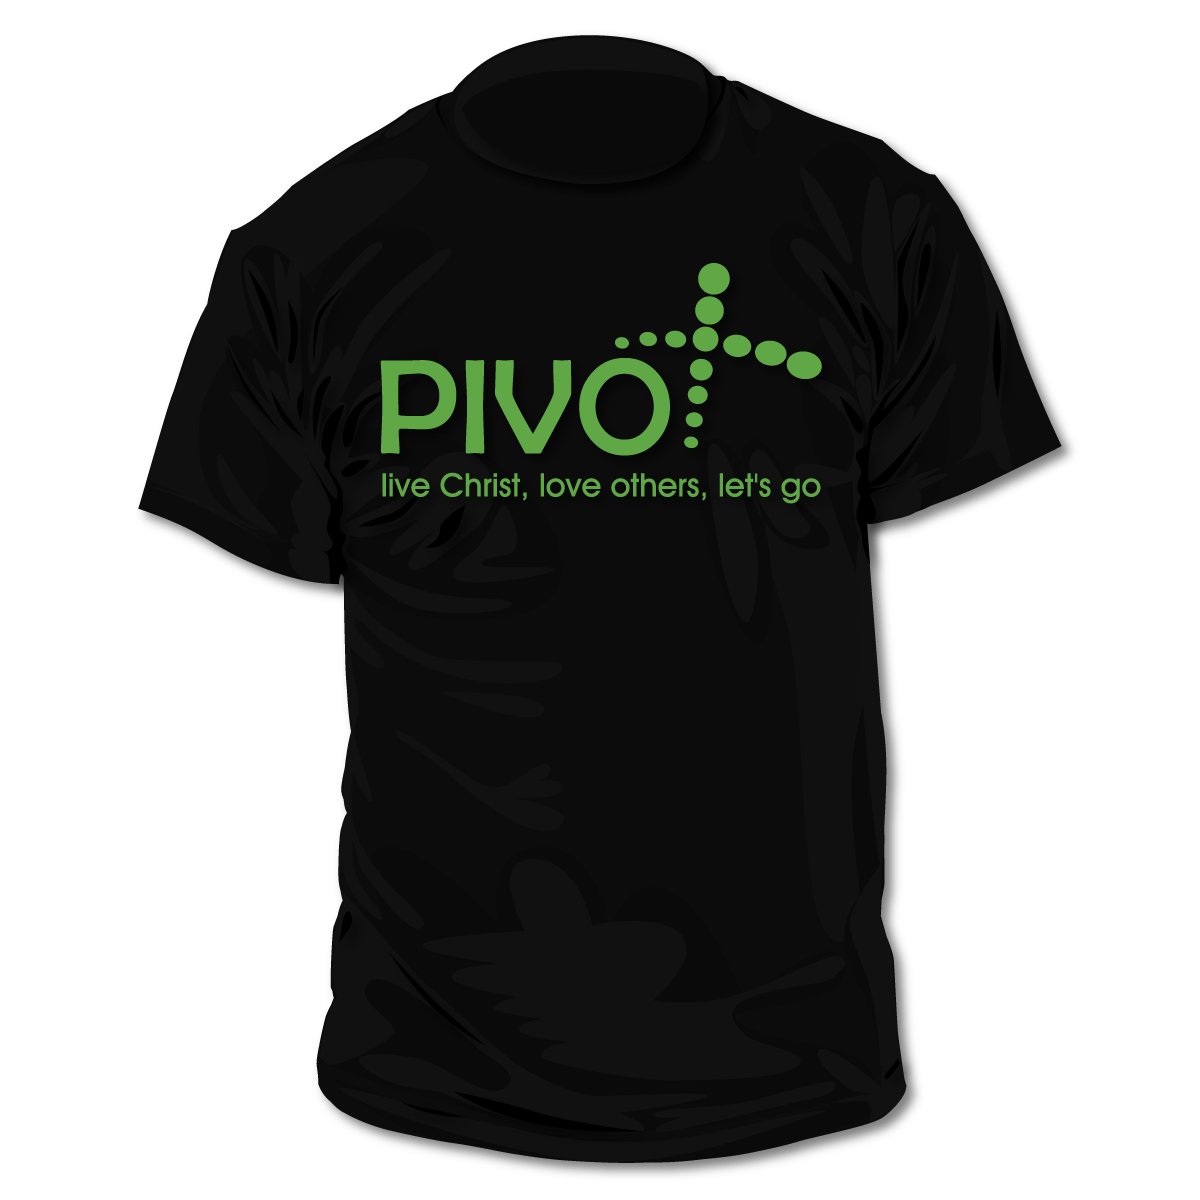 Hosanna Highland - 2015 Pivot Tshirt Design